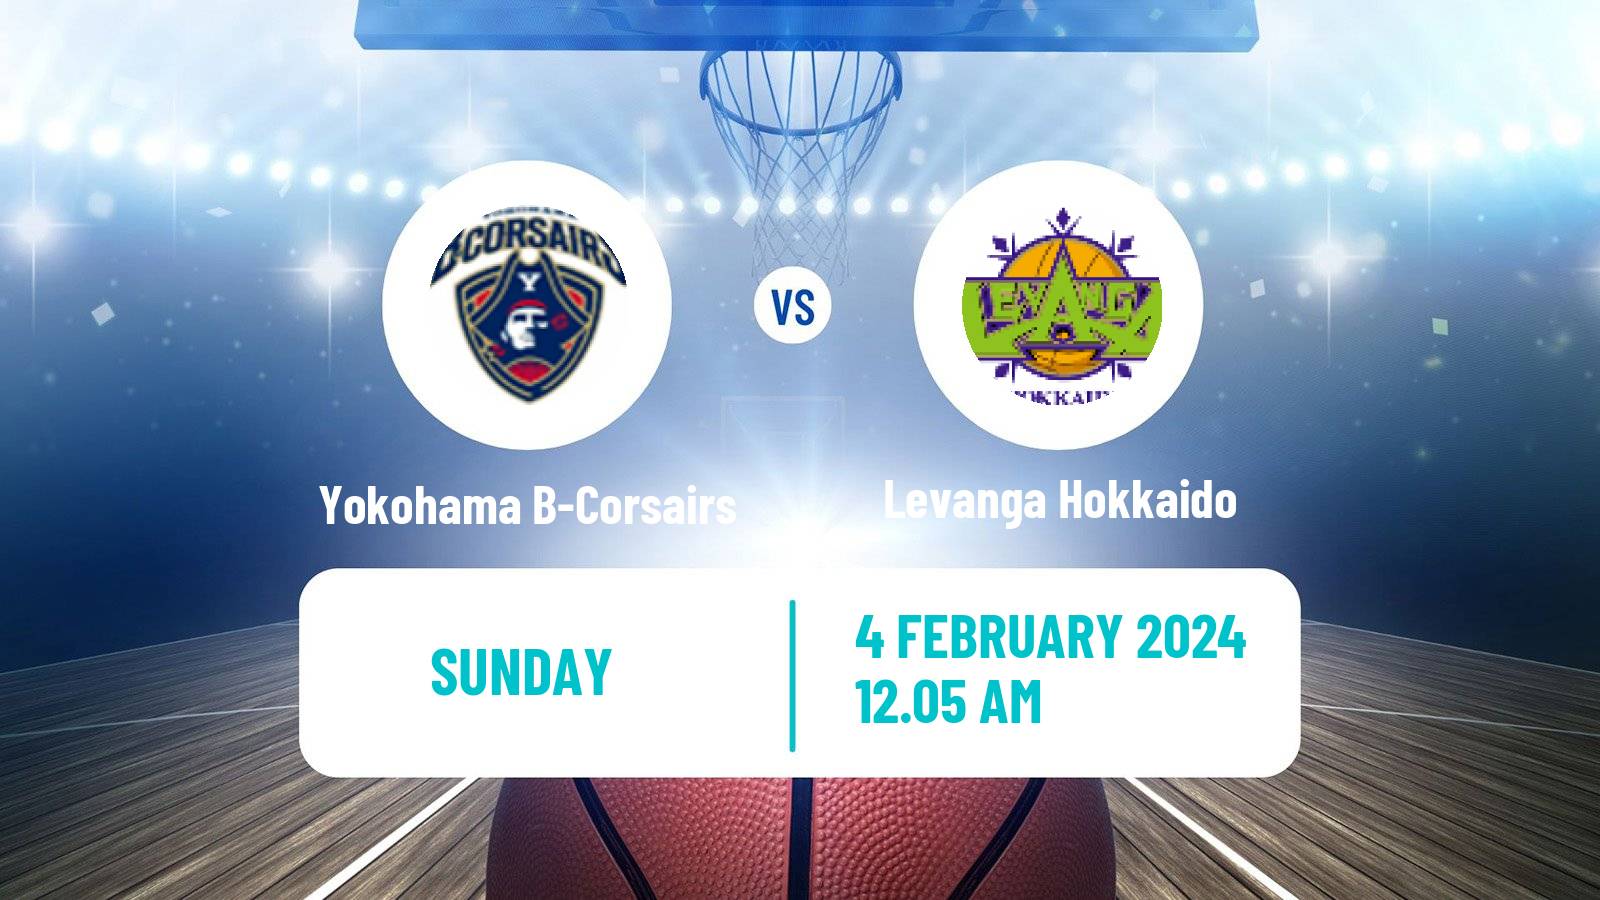 Basketball BJ League Yokohama B-Corsairs - Levanga Hokkaido